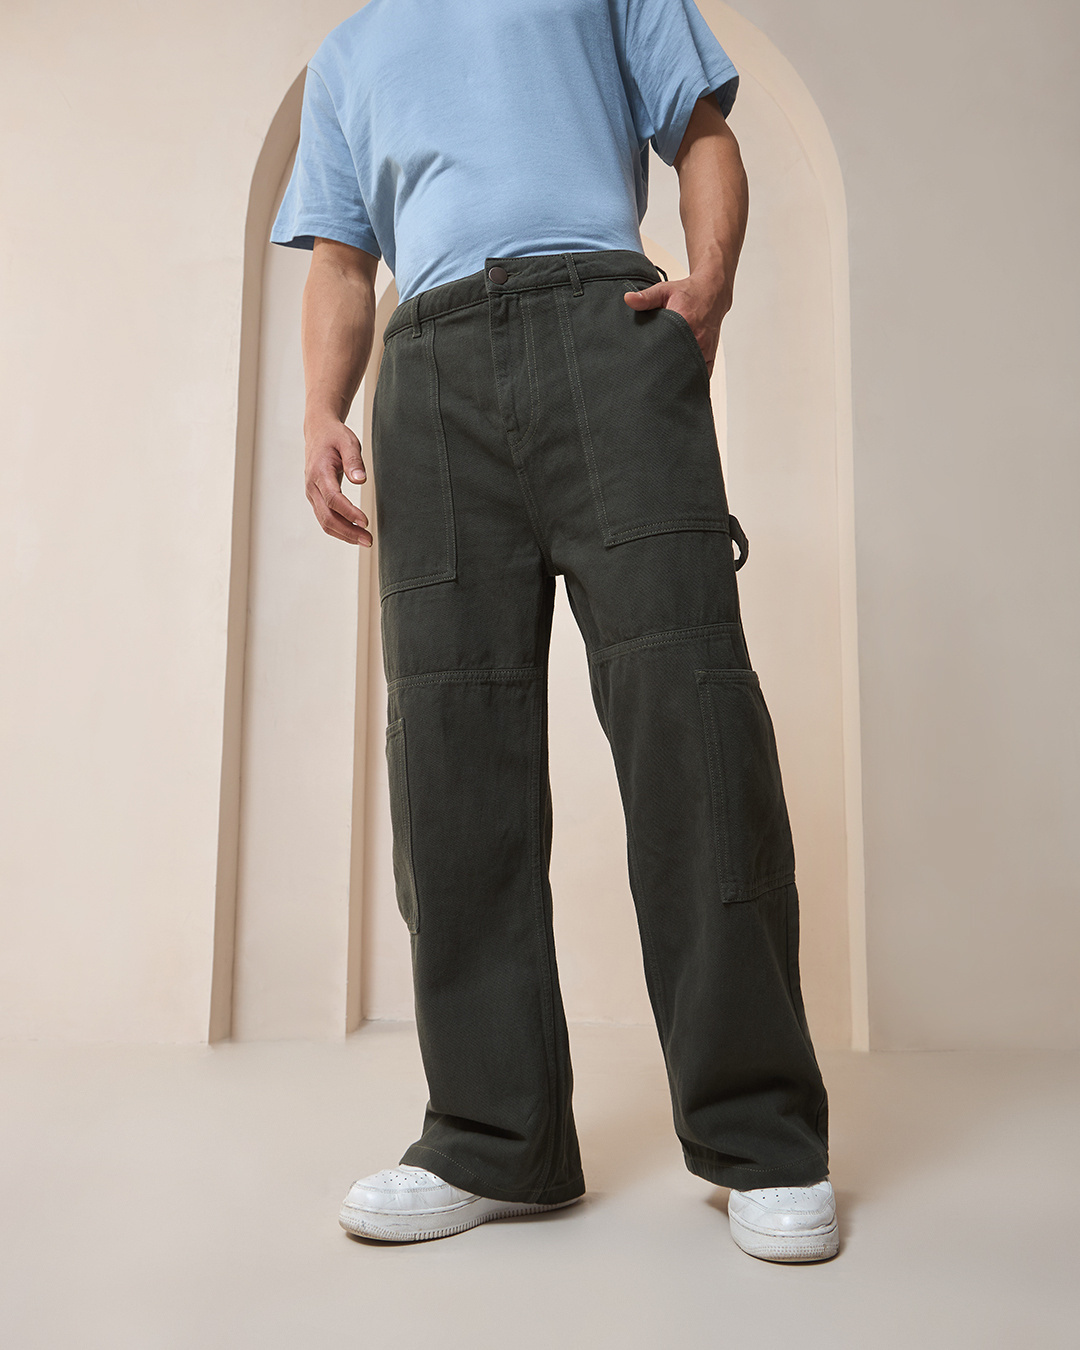 Buy Men's Olive Baggy Straight Fit Carpenter Jeans Online at Bewakoof